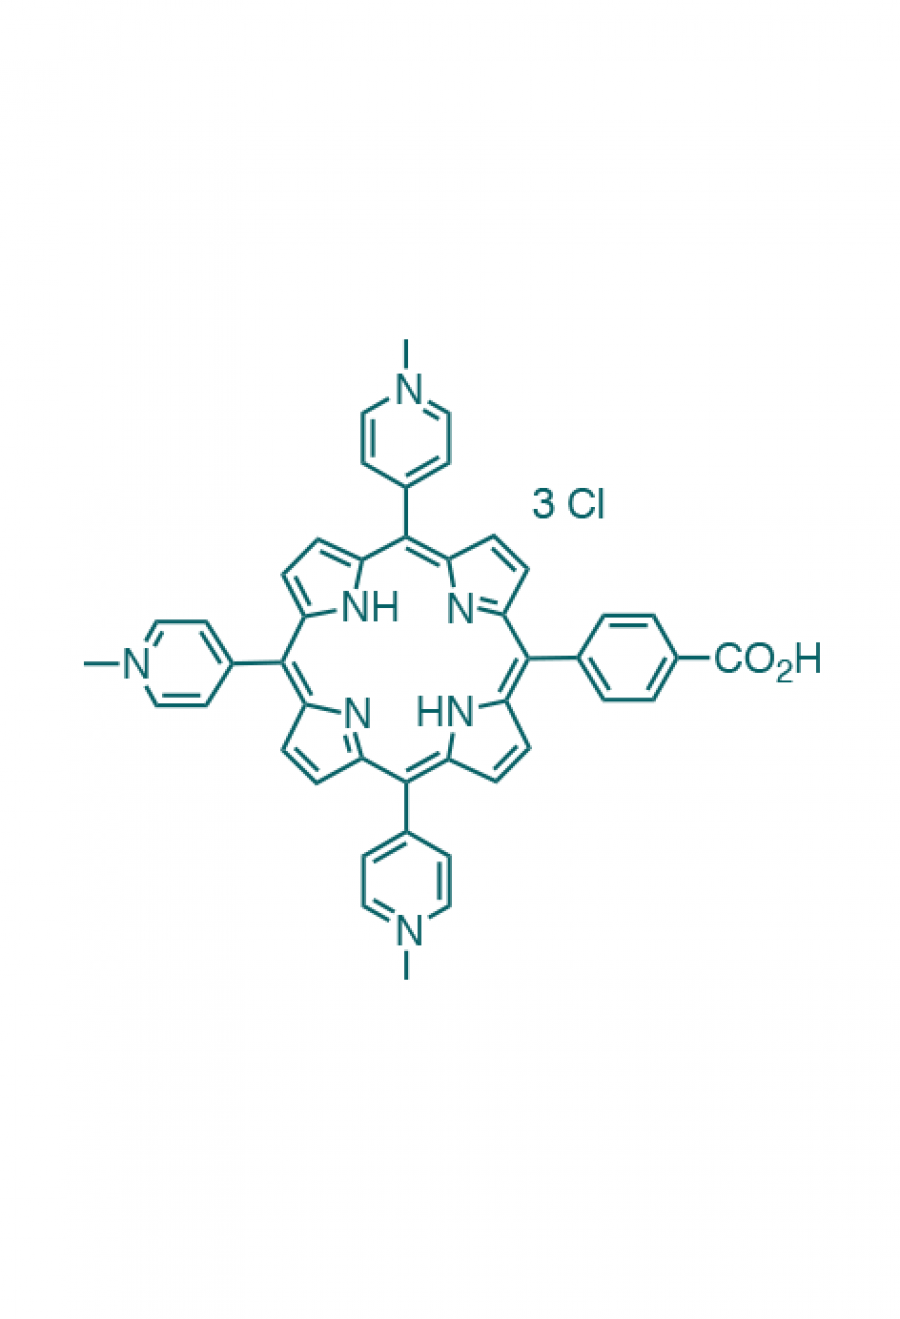 5-(4-carboxyphenyl)-10,15,20-(tri-N-methyl-4-pyridyl)porphyrin trichloride  | Porphychem Expert porphyrin synthesis for research & industry